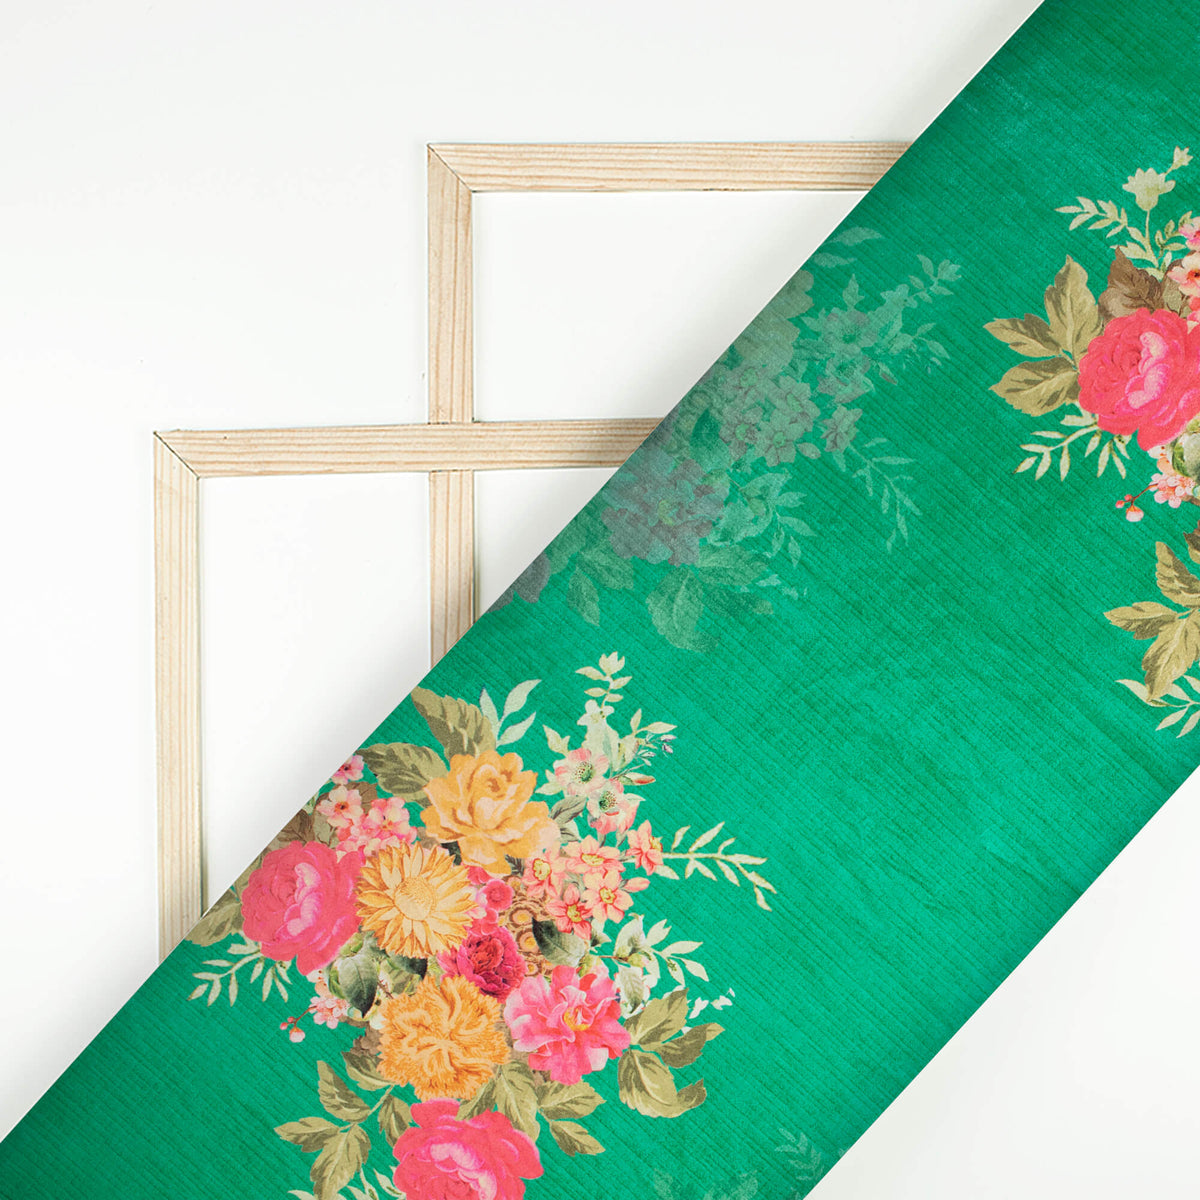 Spanish Green And Hot Pink Floral Pattern Digital Print Premium Velvet Fabric 